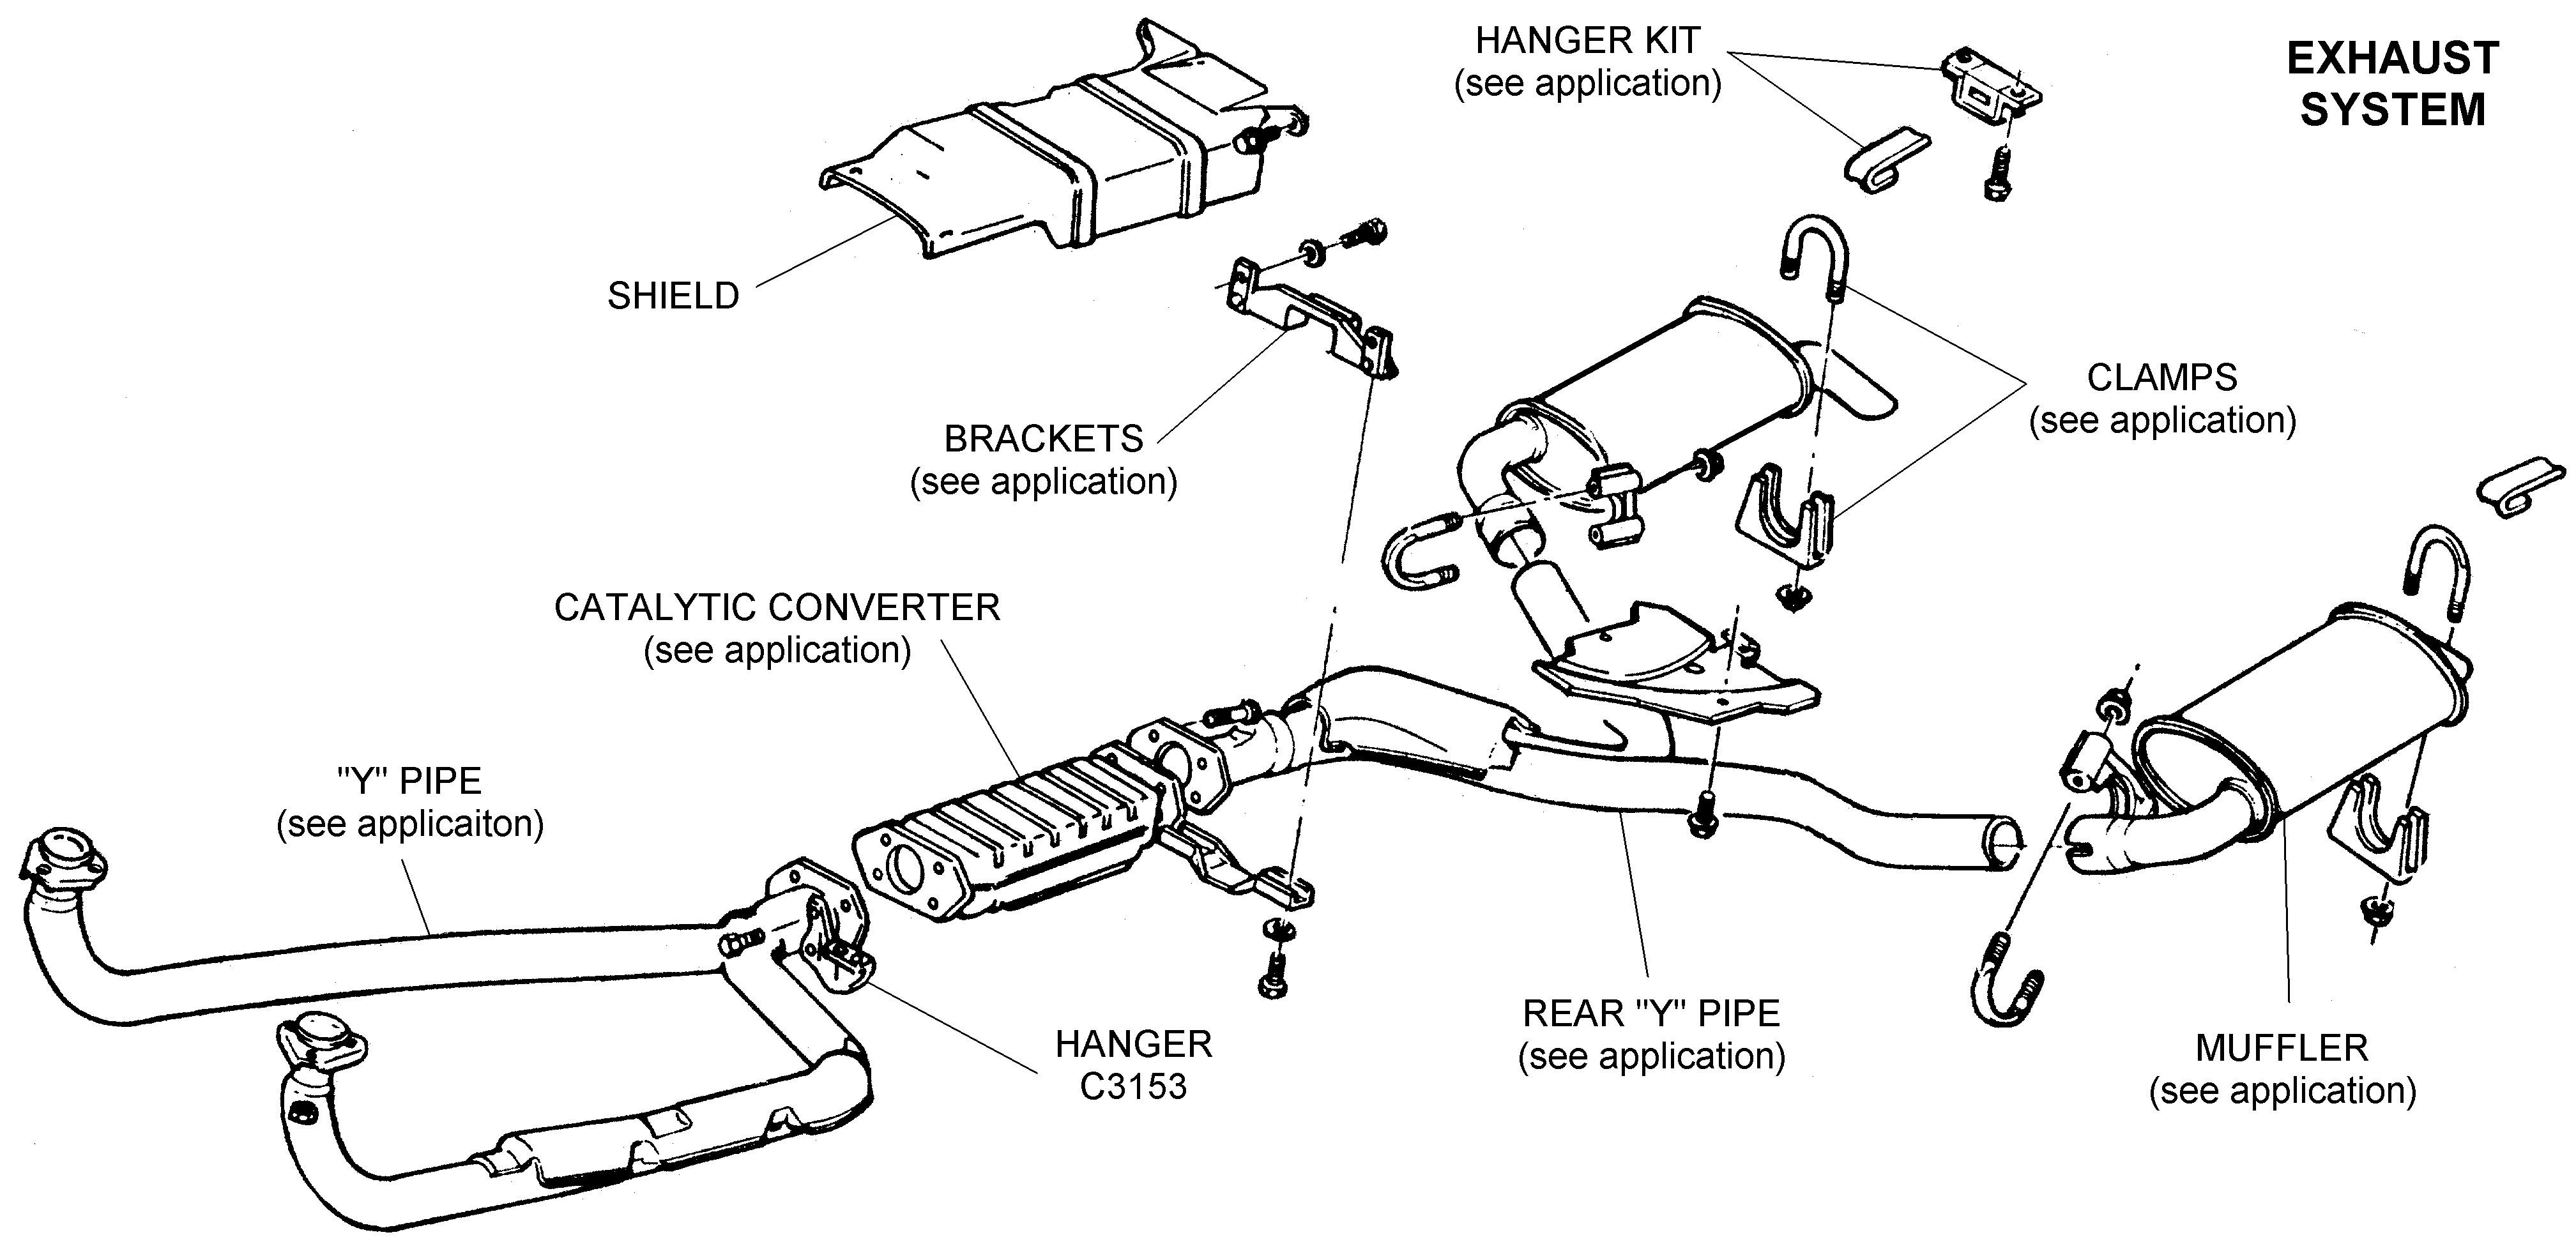 Exhaust System Parts Diagram